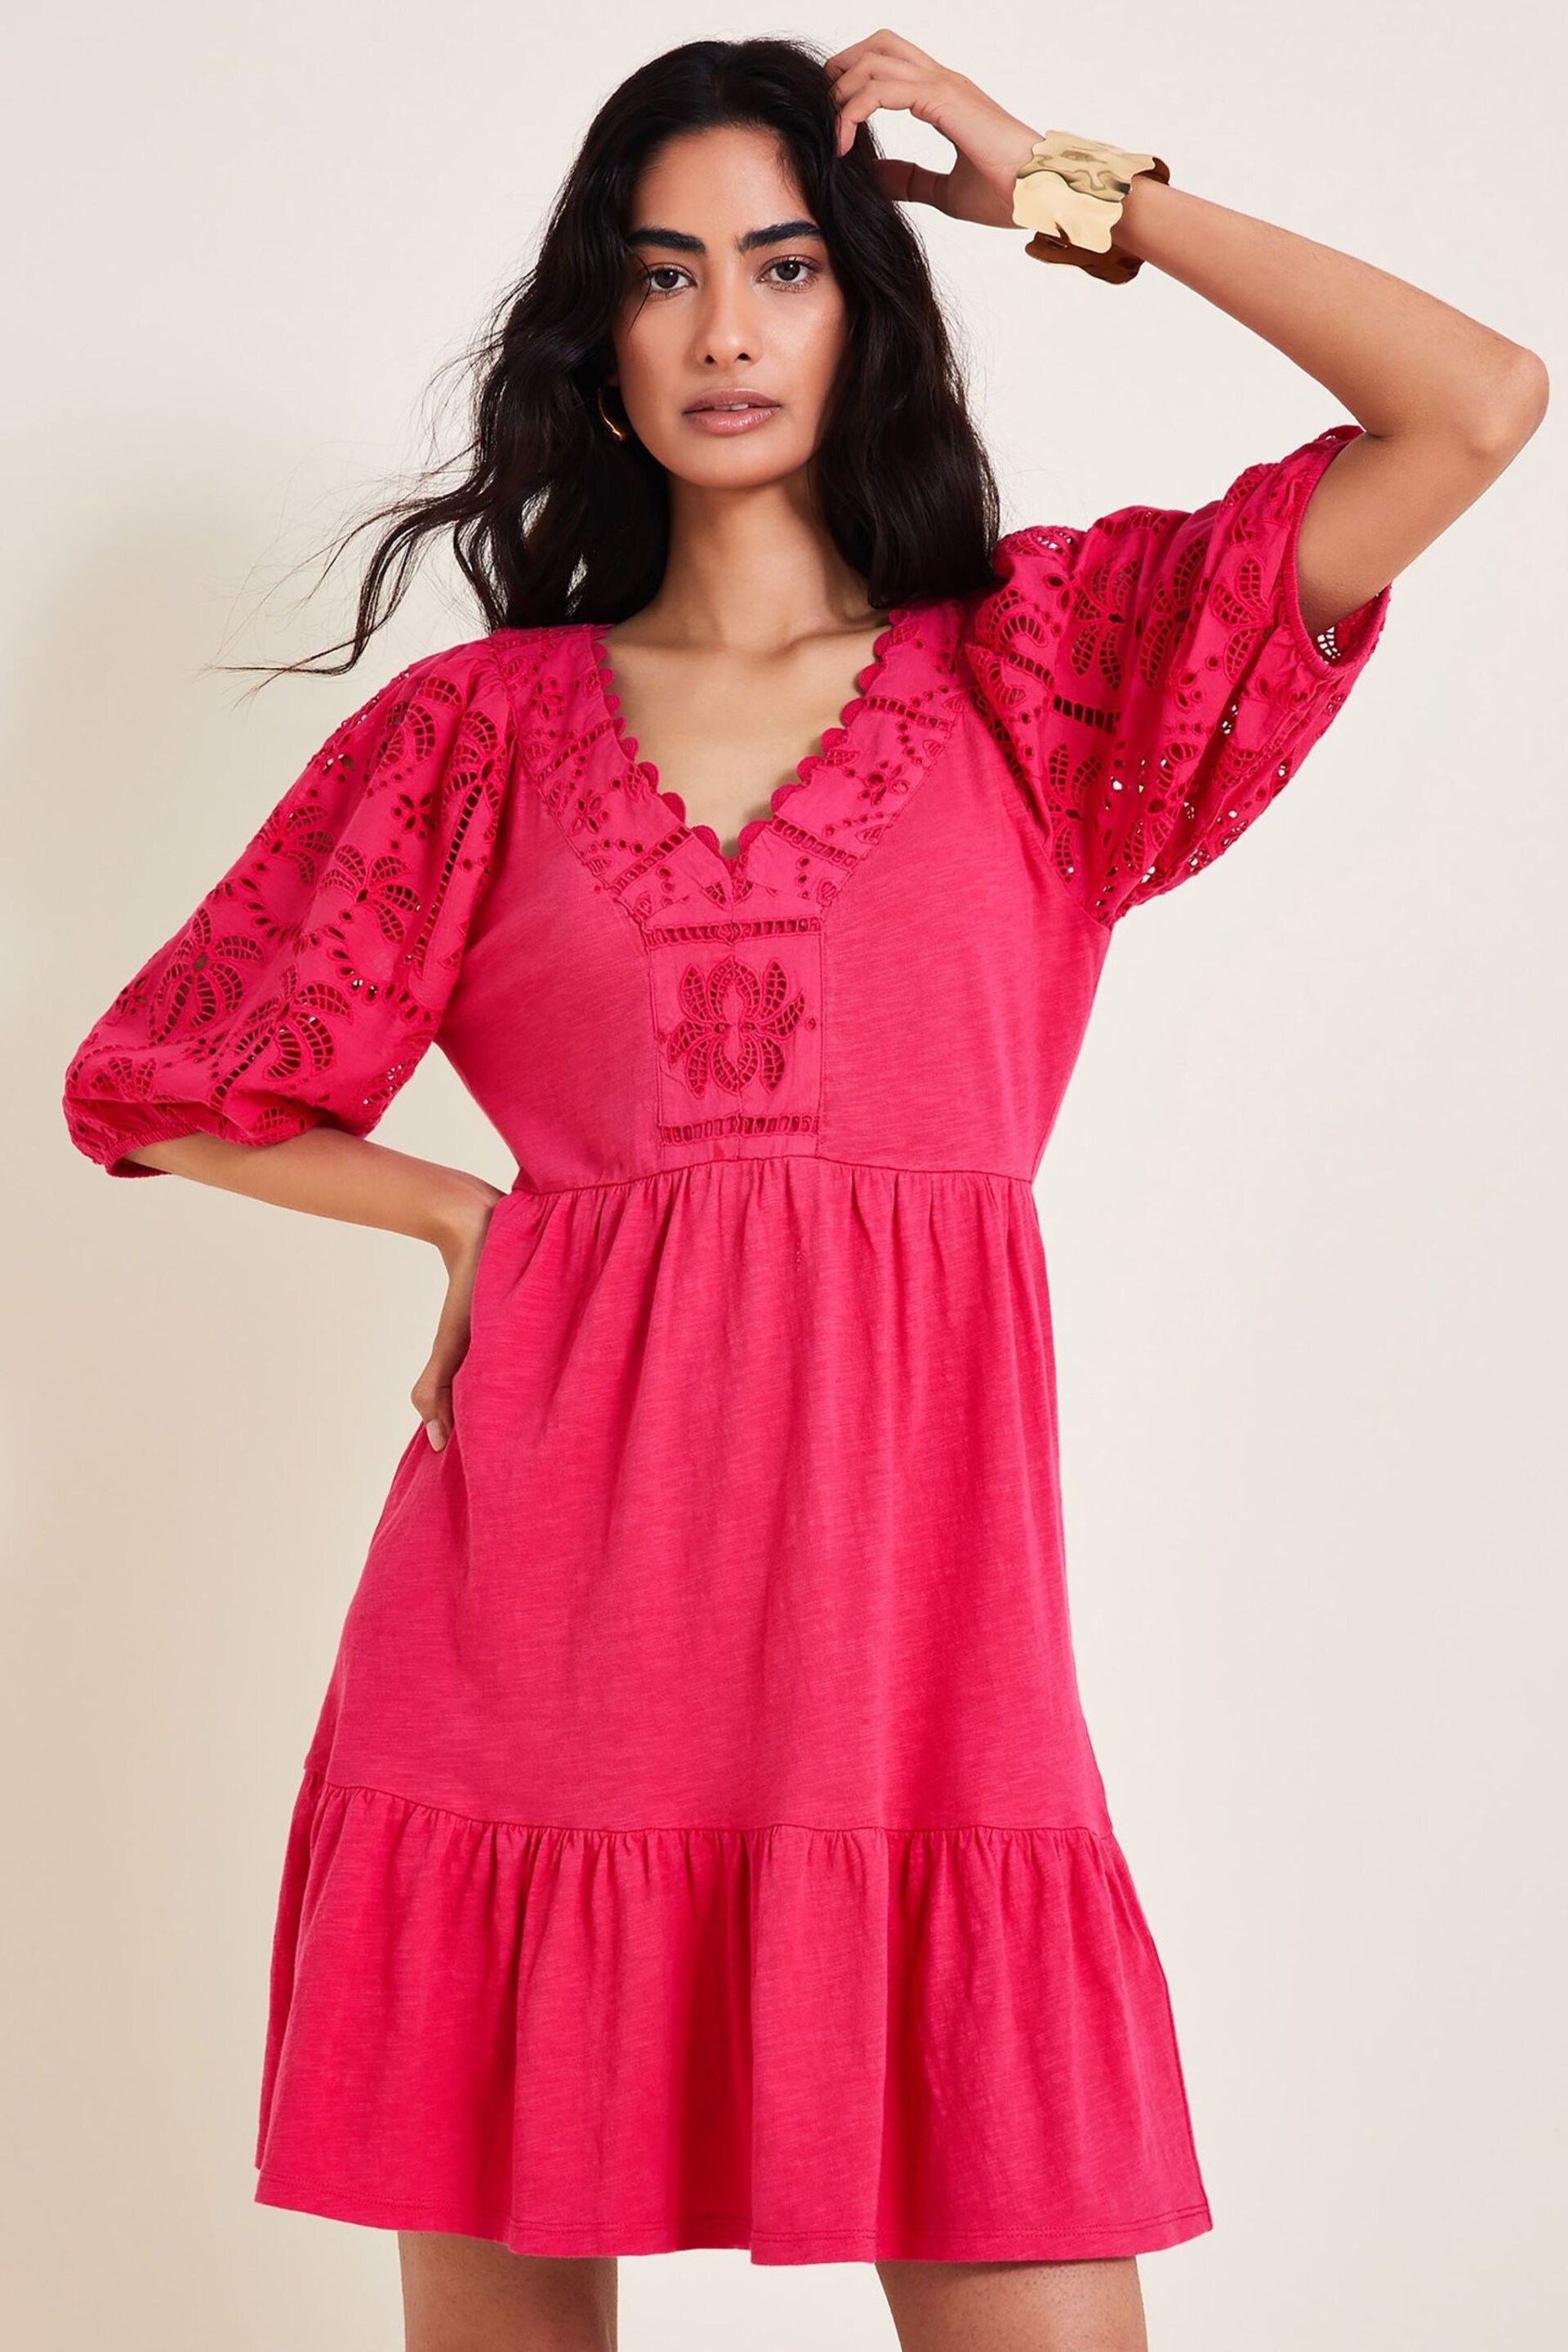 Monsoon Pink Skye Schiffli Dress - Image 3 of 6